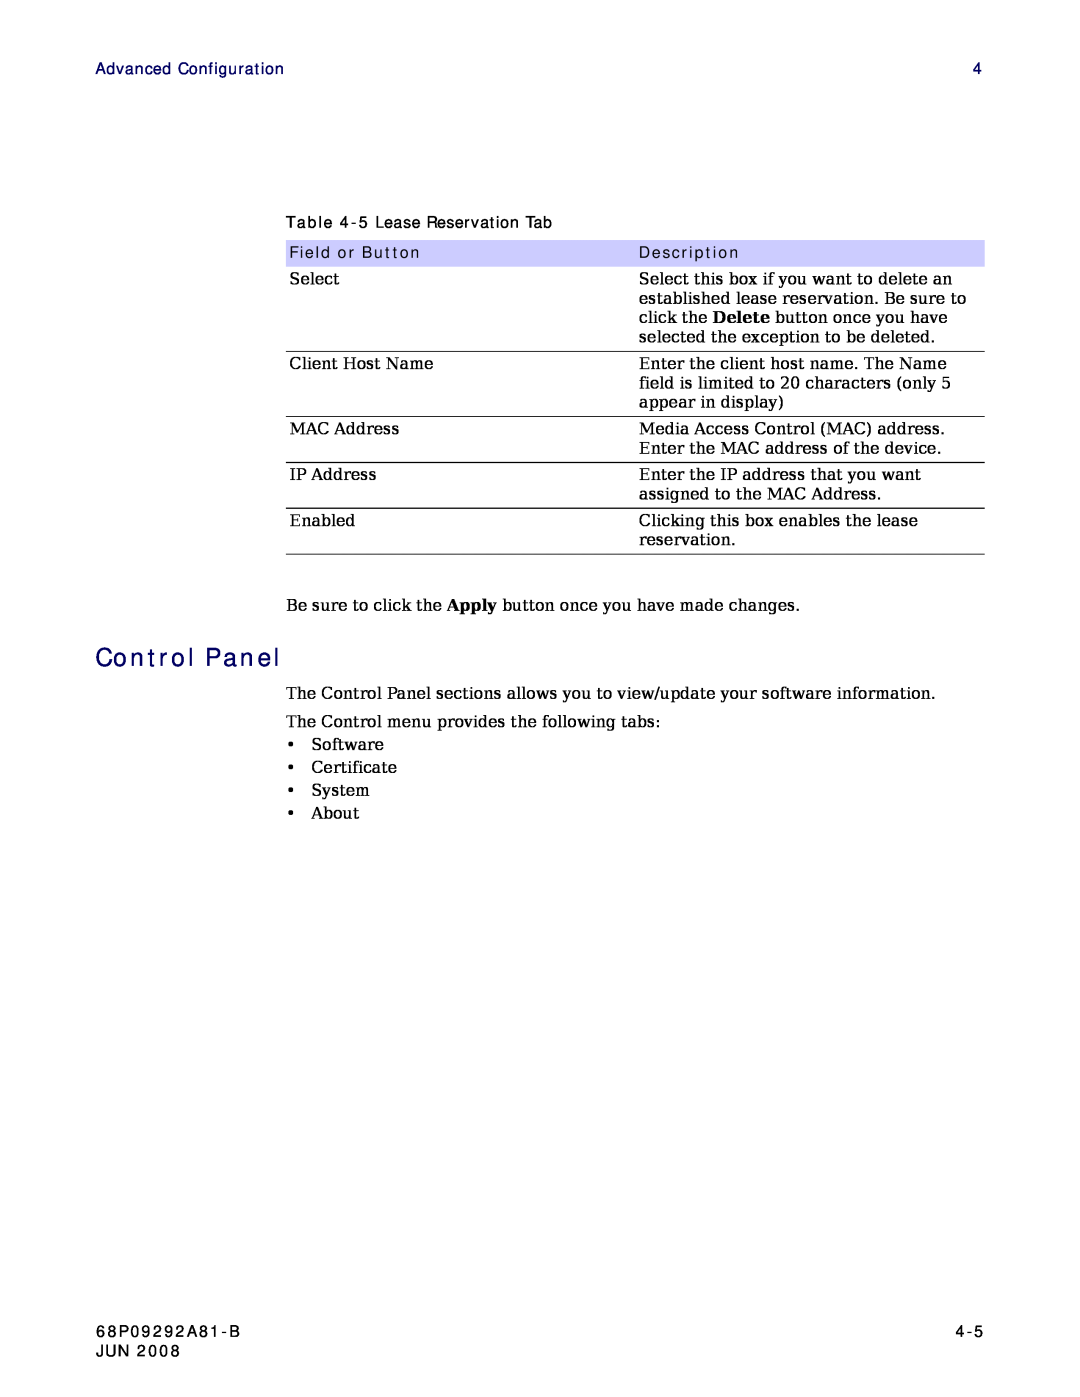 Motorola CPEI 750 manual Control Panel, Advanced Configuration, Field or Button, Description, 68P09292A81-B 